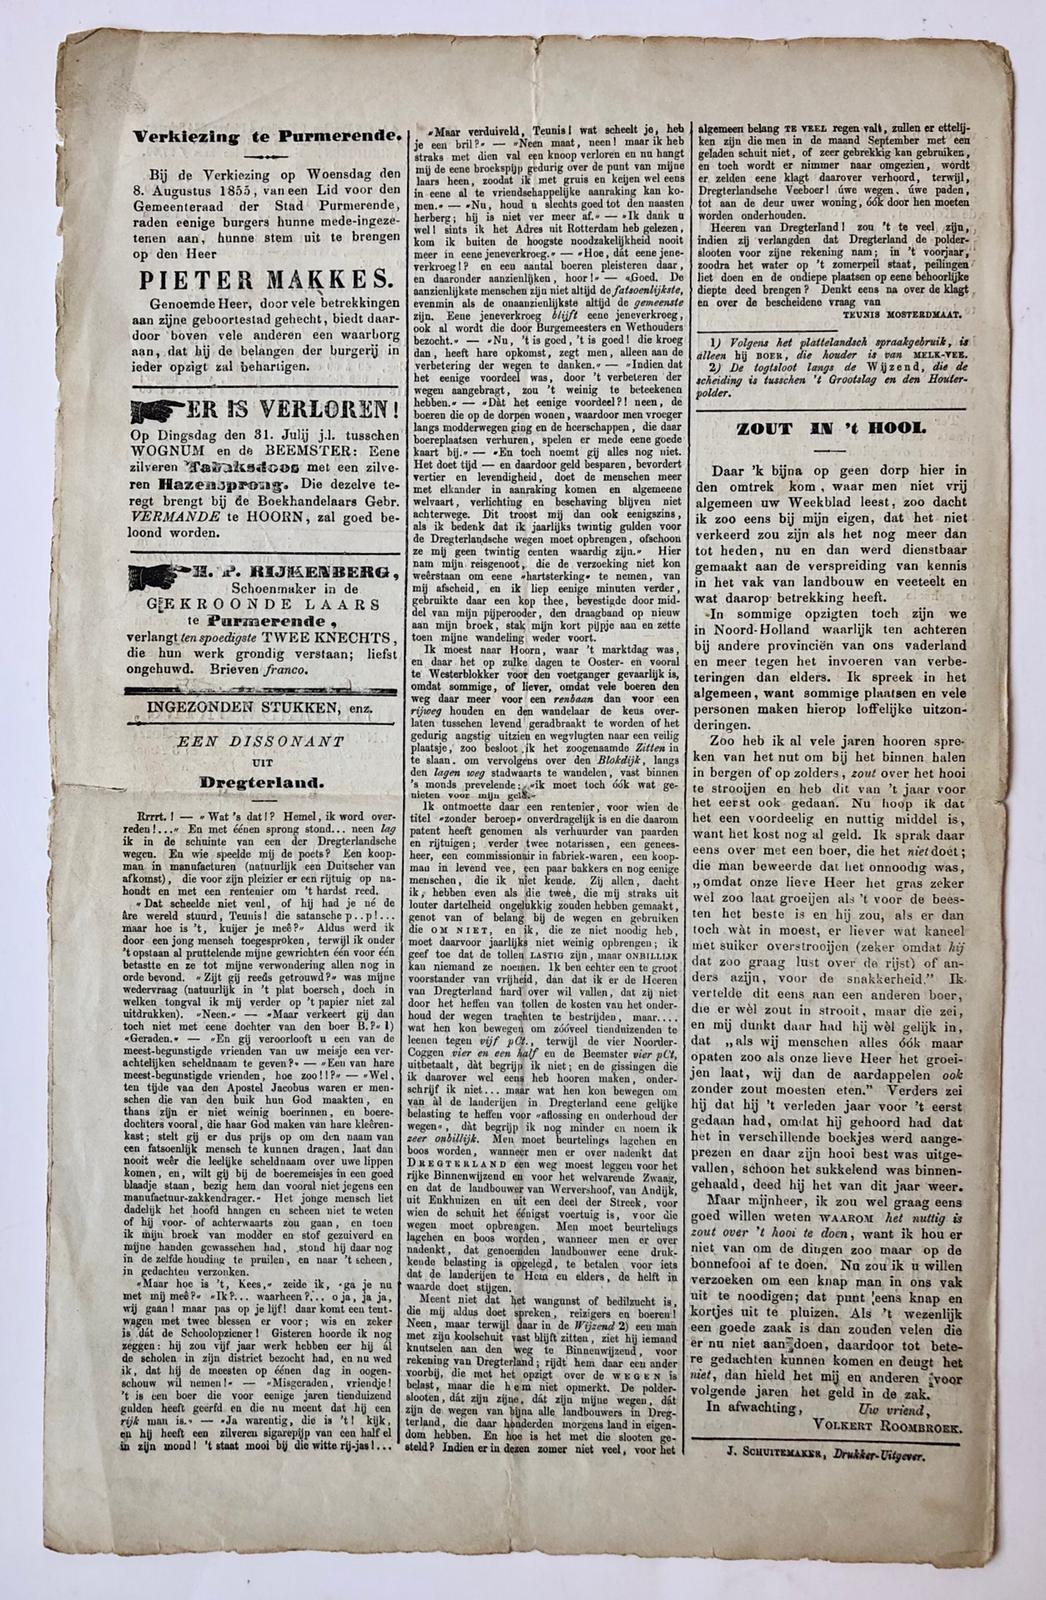 [NEWSPAPER, PURMEREND, MAKKES, 1855] Exemplaar van 1e- jaargang (1855) nr. 32 van het Algemeen Weekblad [...] uitgegeven te Purmerende. Gedrukt, 4p met een toegift.